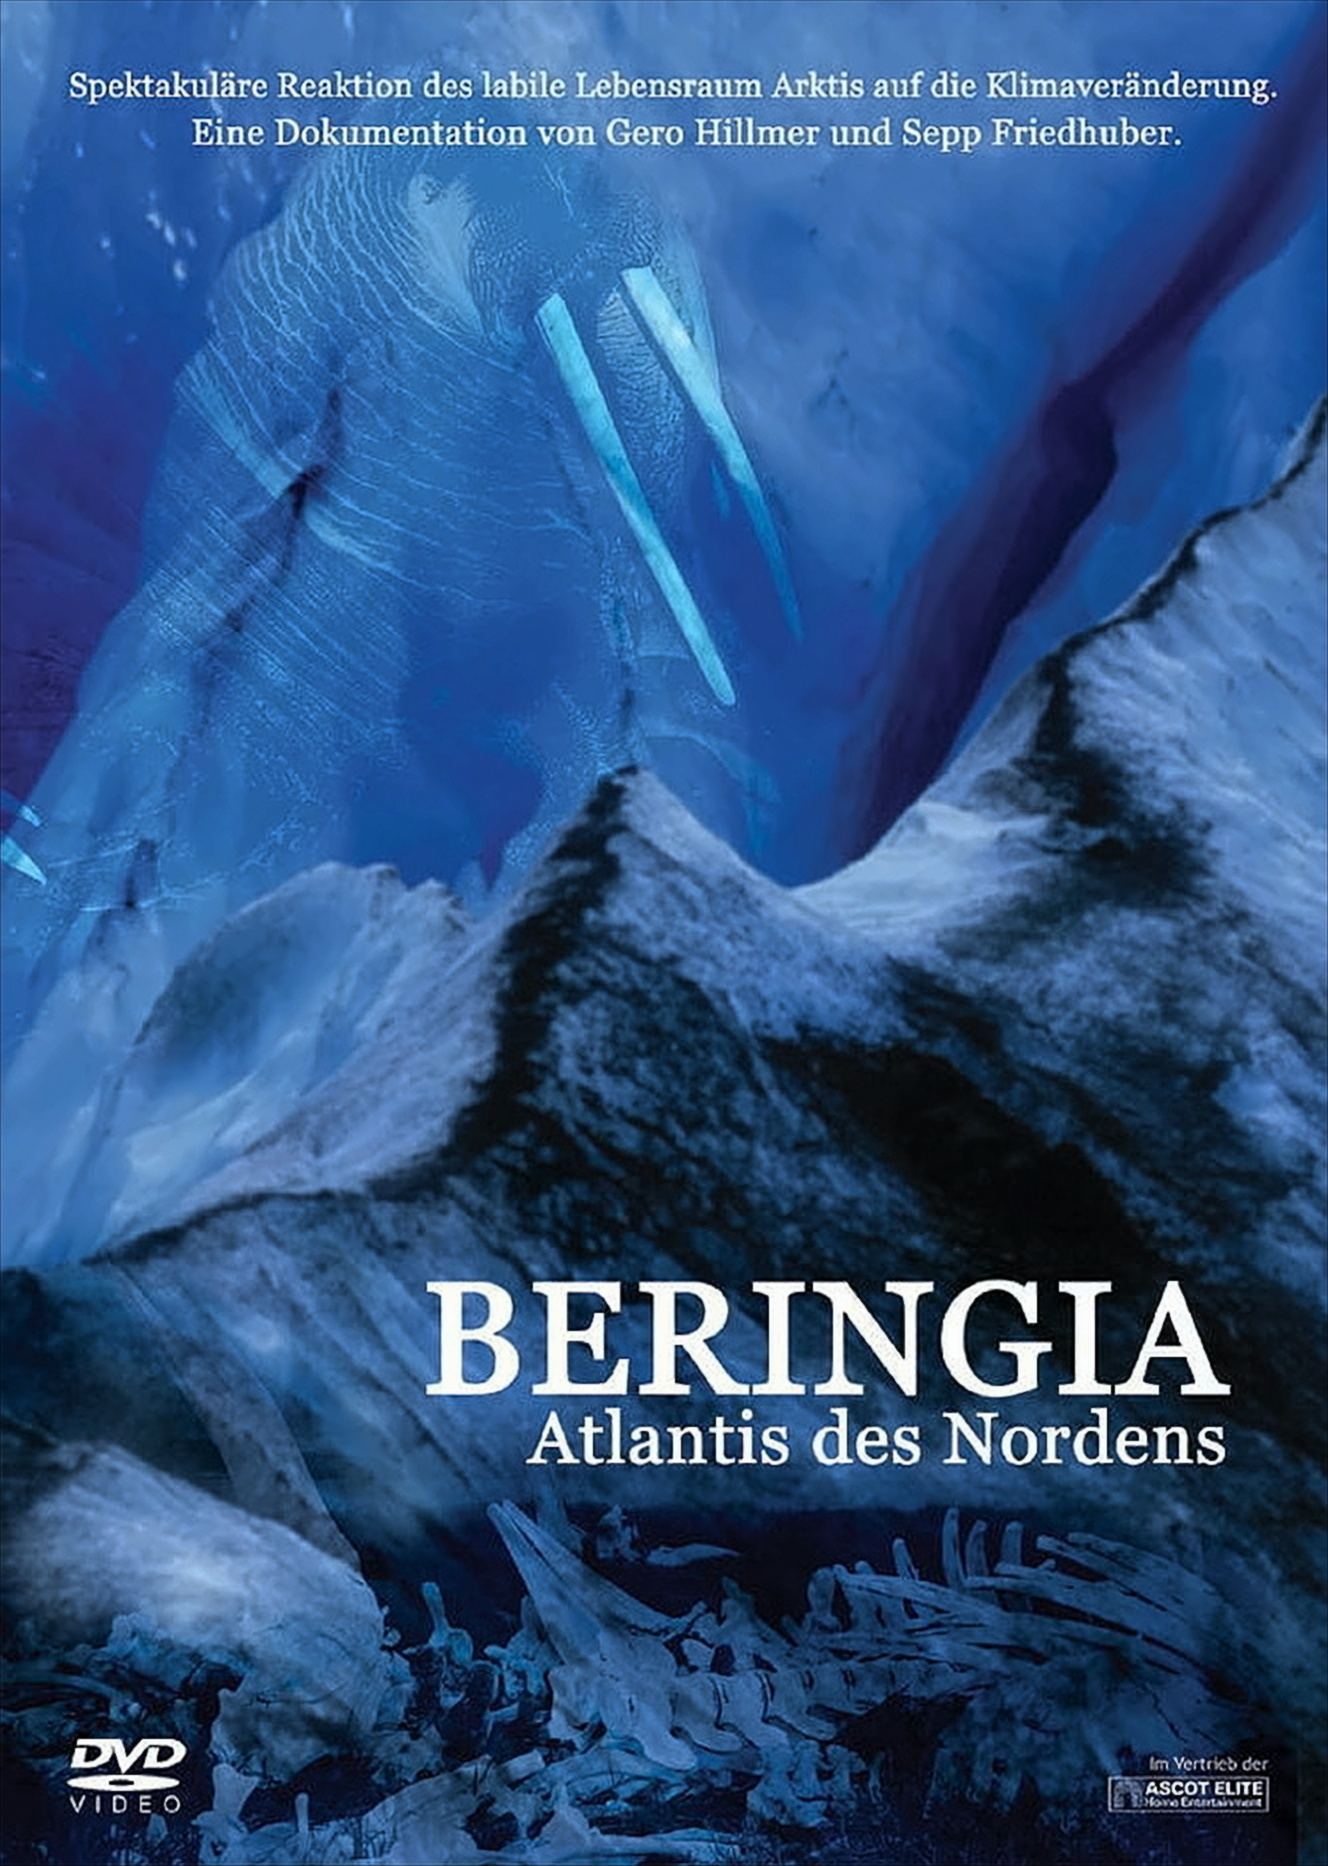 DVD des Atlantis Nordens Beringia -